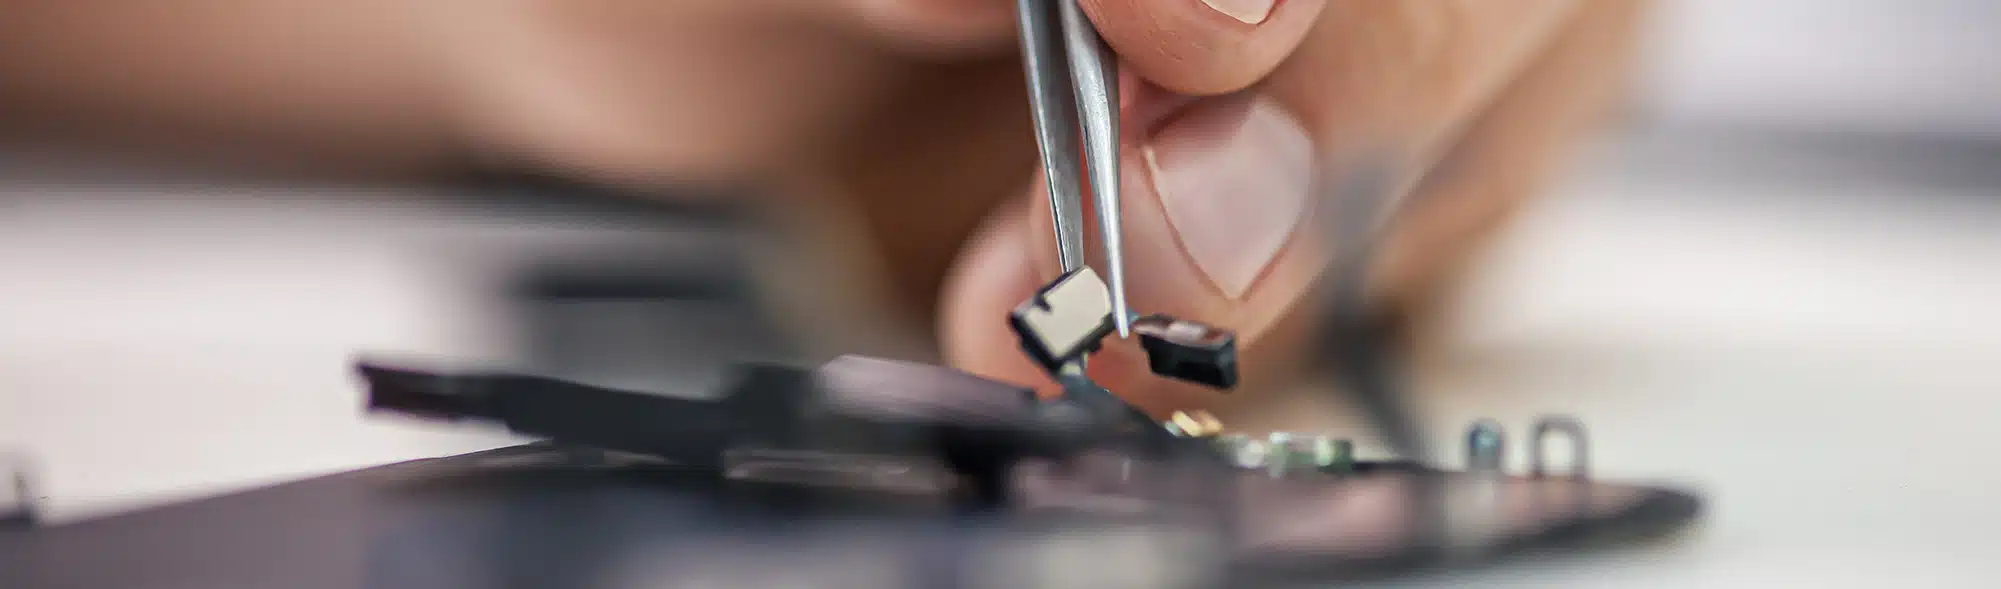 Technician repairs smartphone, uses tweezers as tool in electronics workshop